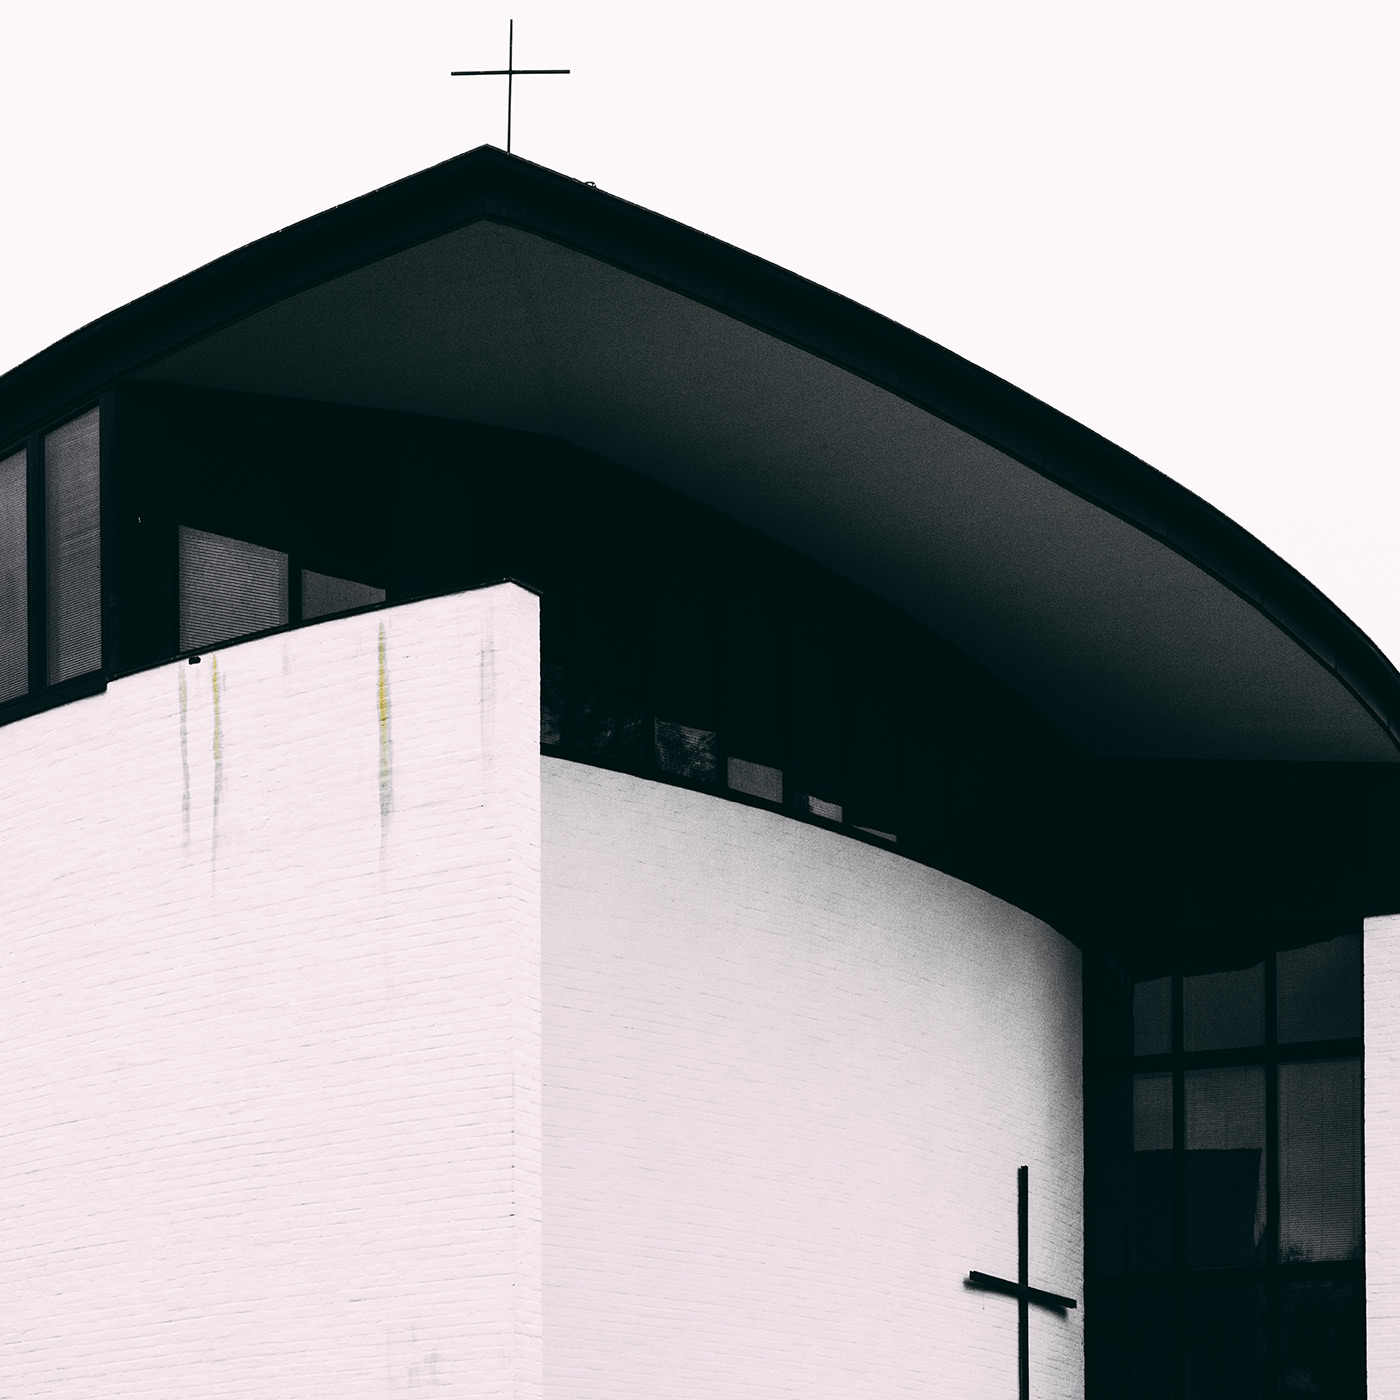 Oriveden Church <br />Location: Orivesi, Finland <br />Architects: Kaija and Heikki Sirén